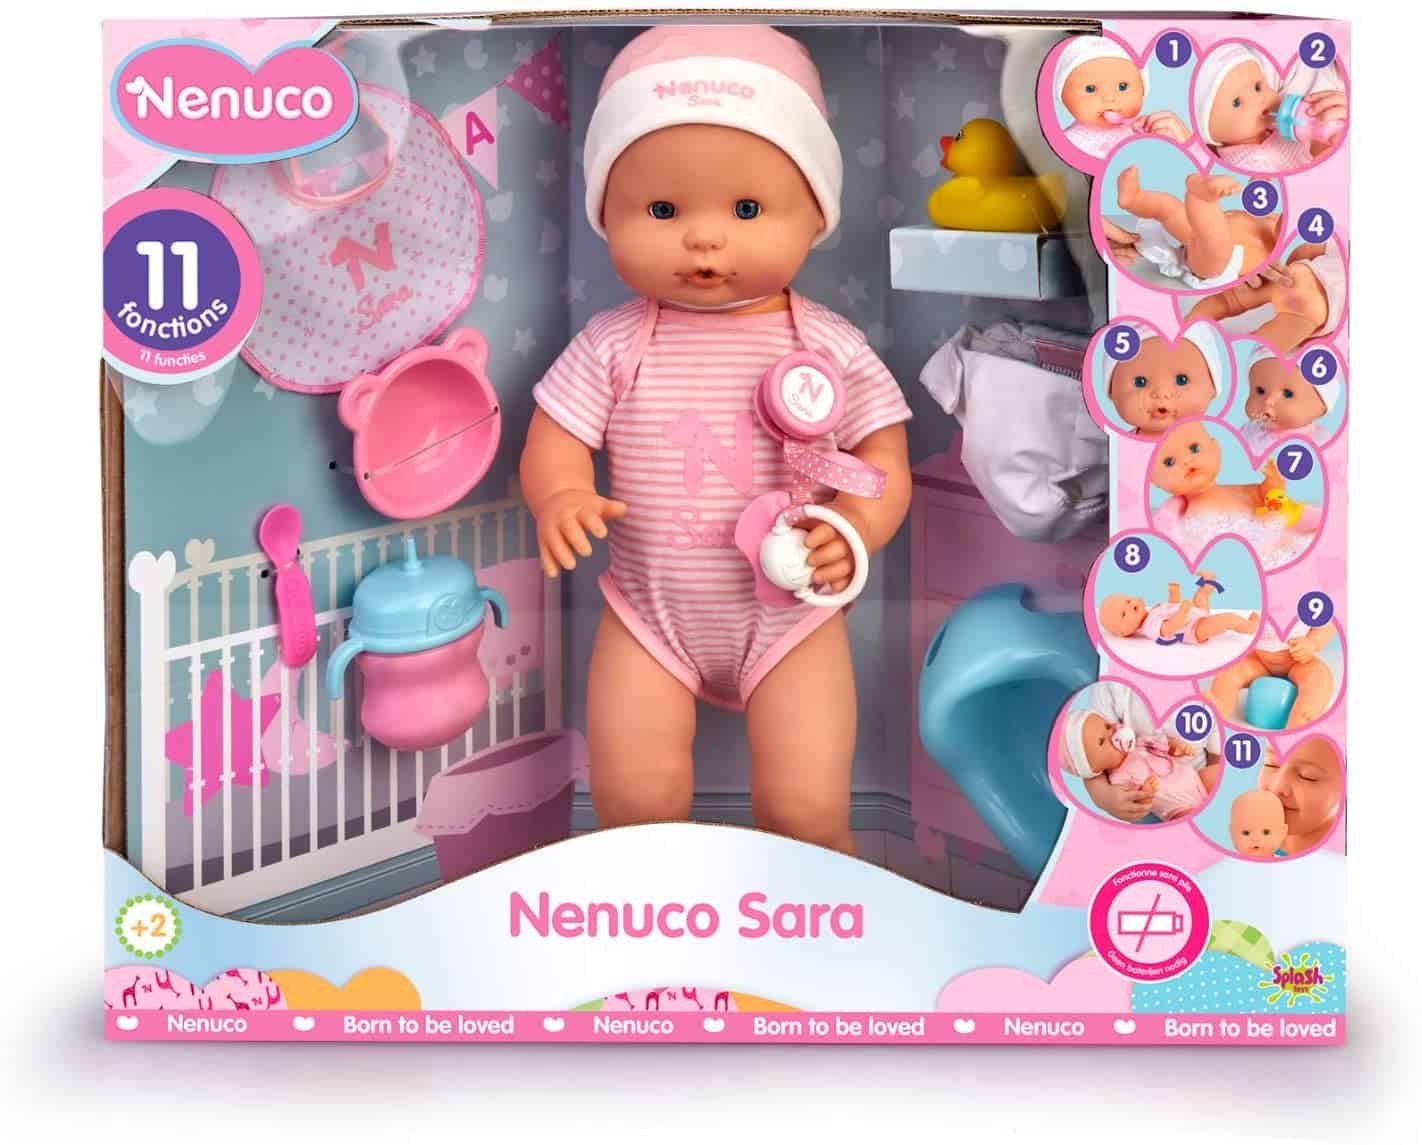 Best baby doll with soft body: Doll Nenuco soft